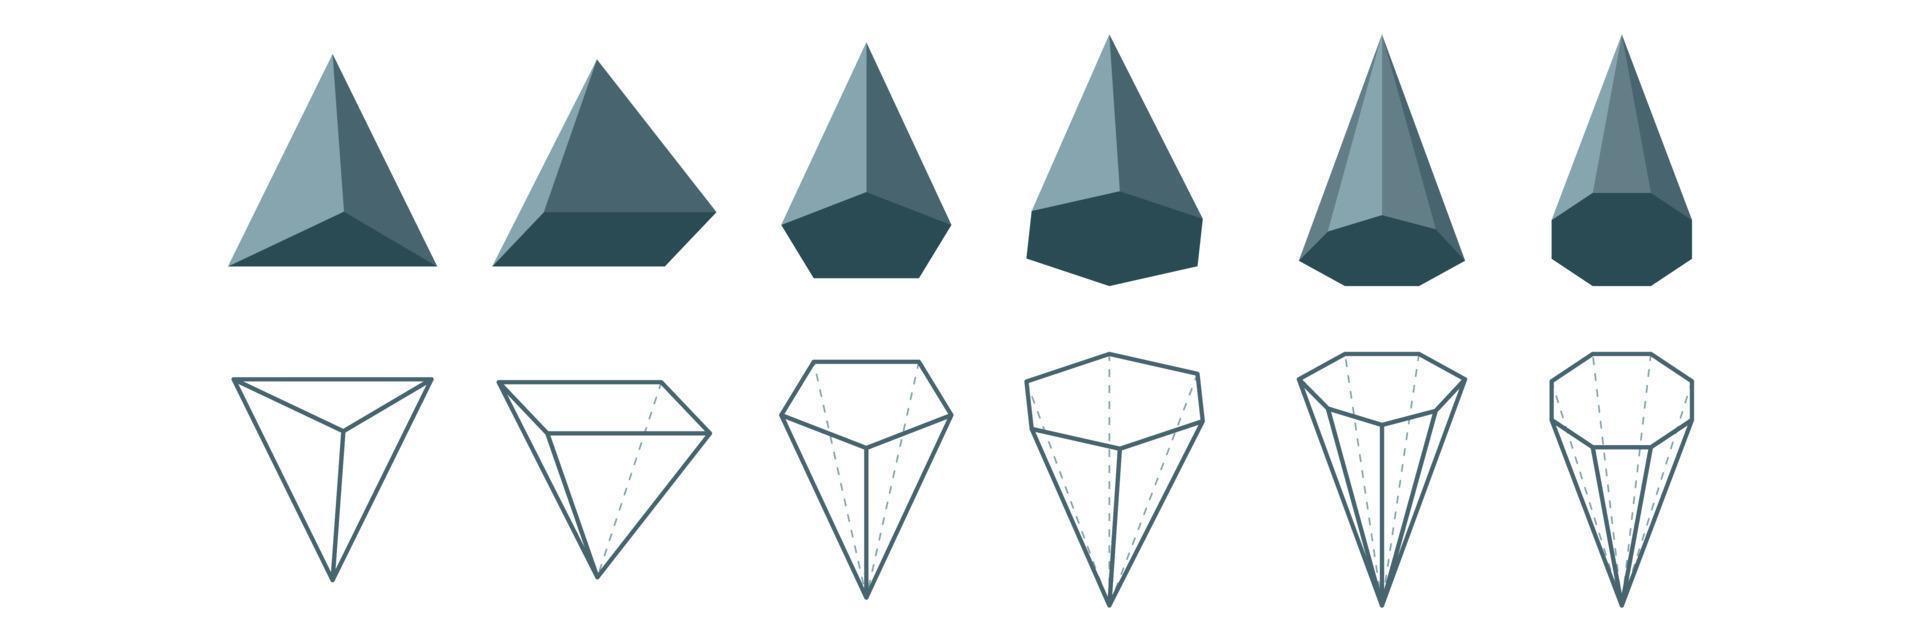 Pyramid types set. 3D and line icon. Math geometric figures. Polyhedron. Triangular Rectangular Pentagonal Hexagonal Heptagonal Octagonal polygonal pyramid. Vector illustration